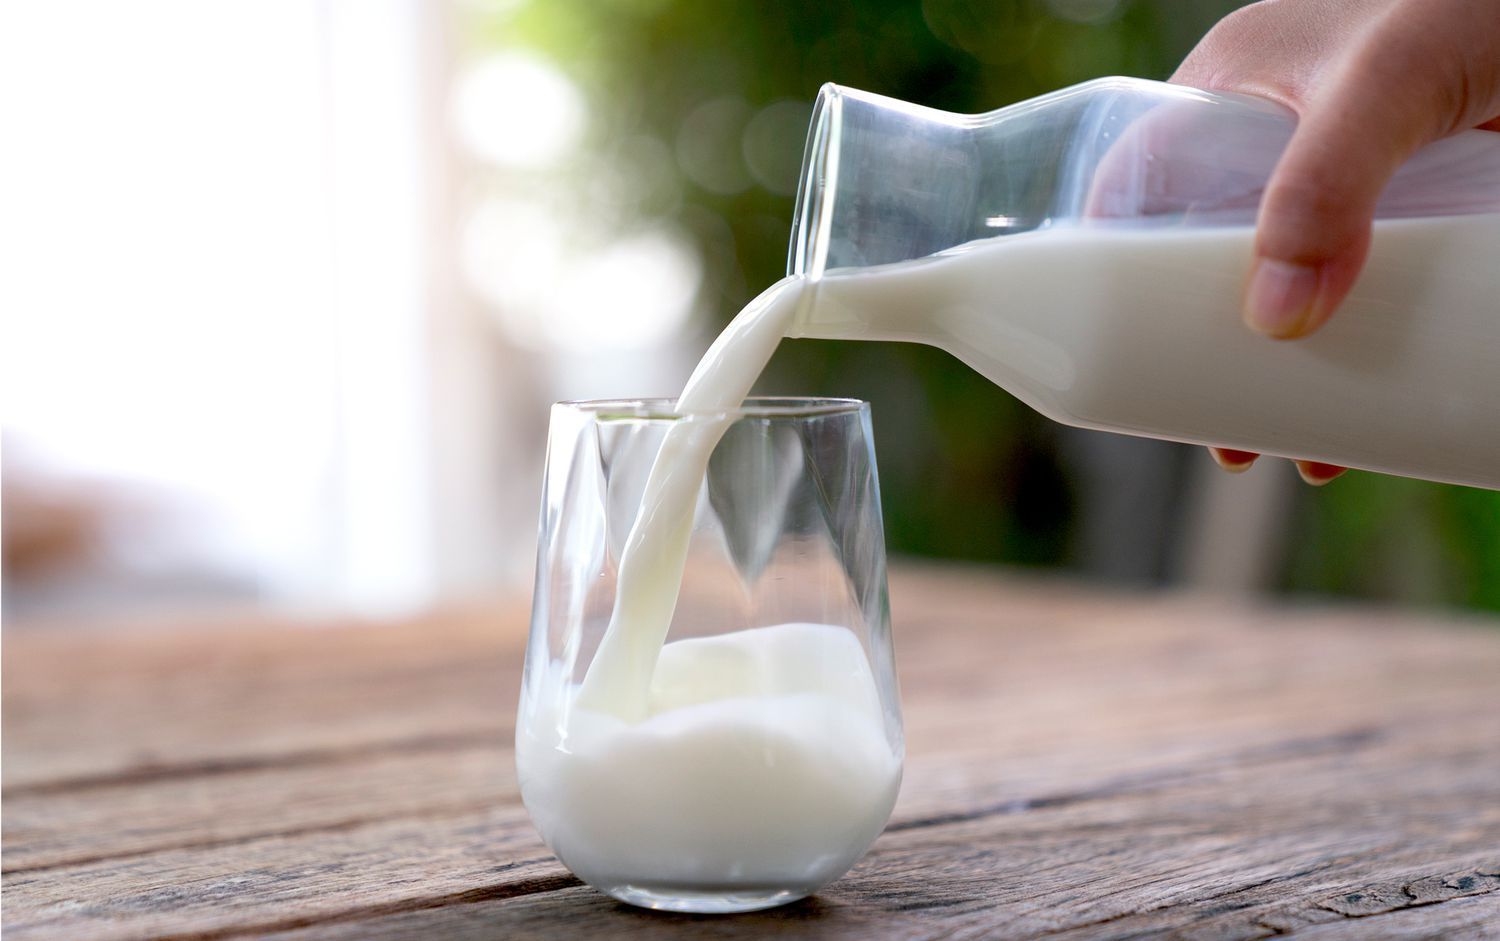 FACT CHECK: Questions have arisen around milk